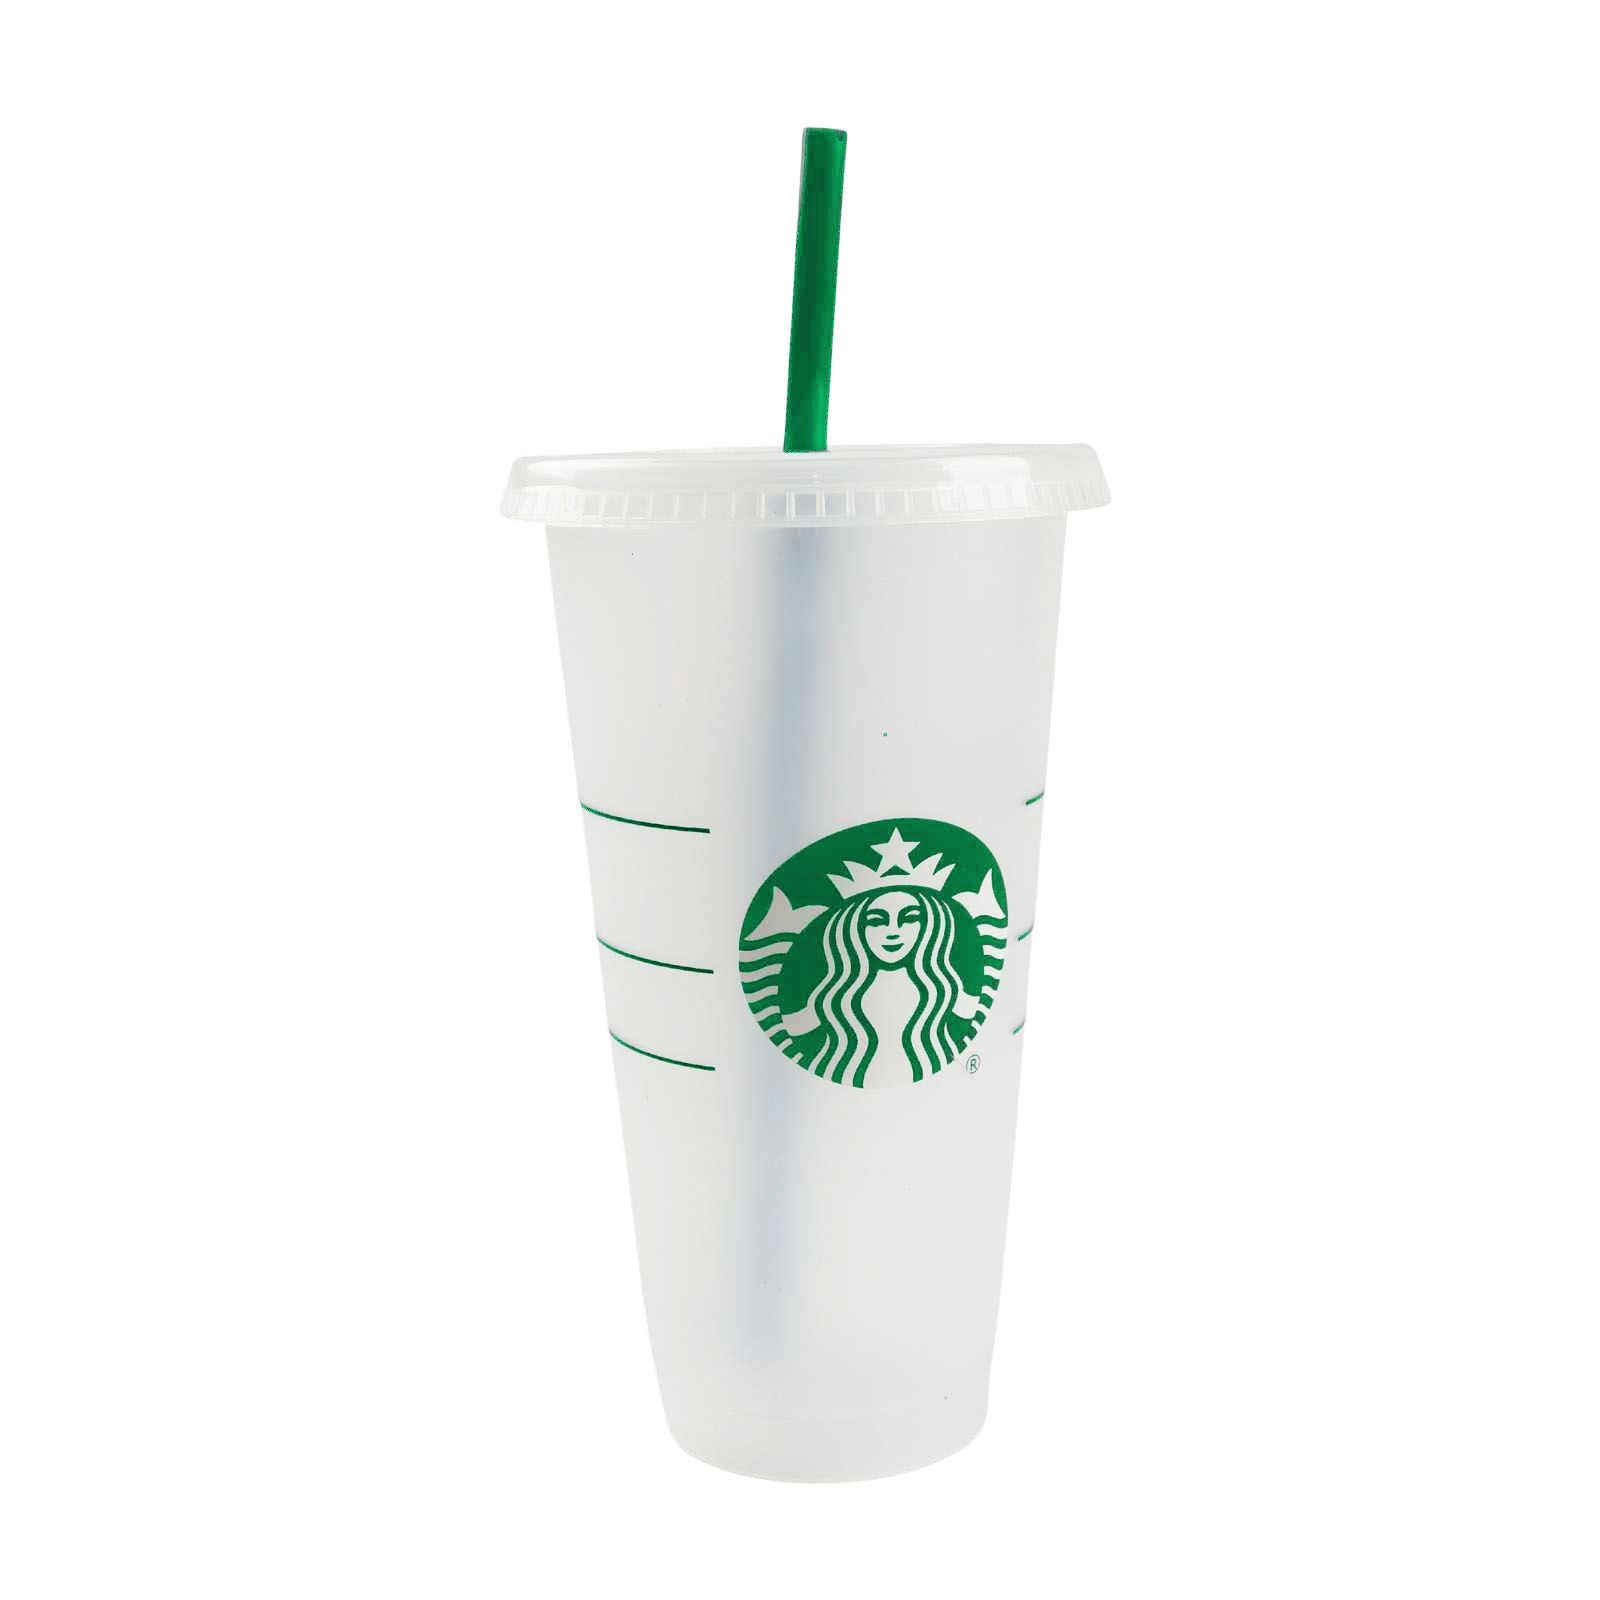 XL 24oz Starbucks Reusable Plastic Cold Coffee Cup